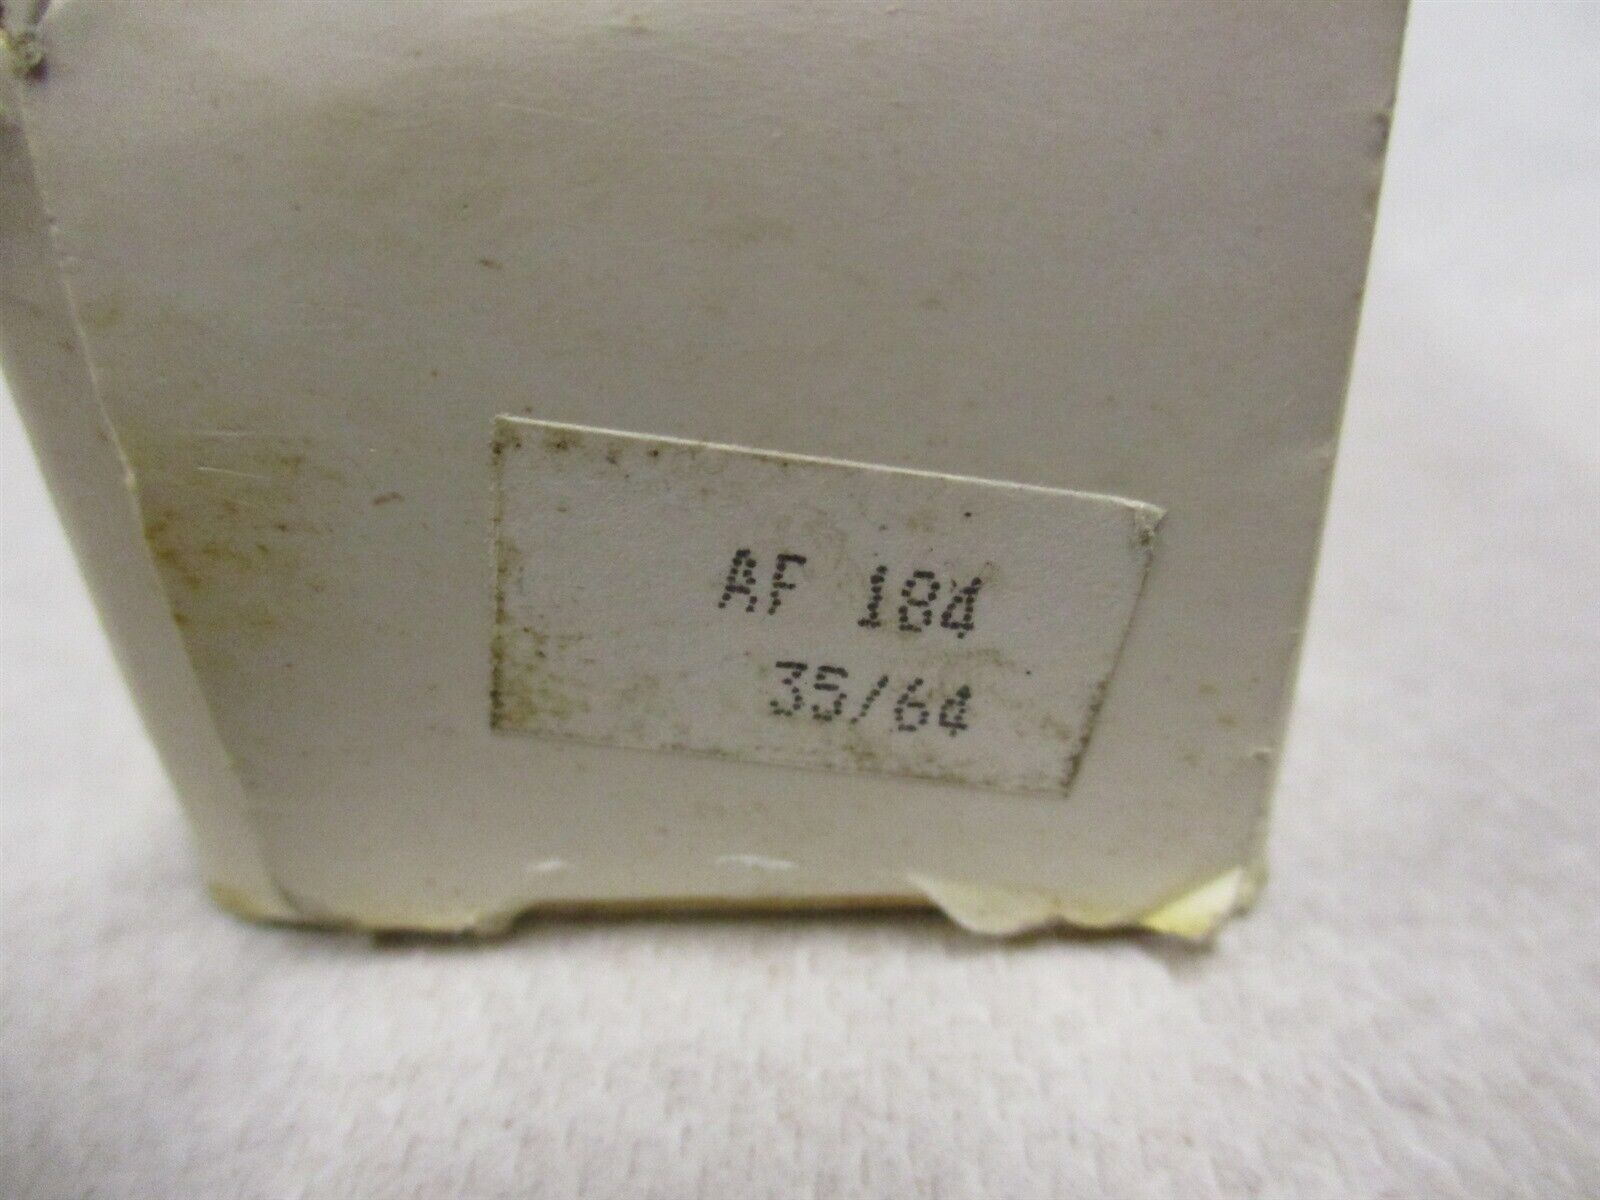 TSD AF184 35/64" to 9/16" Collet Capacity Series AF100 1.45" Outside Diameter